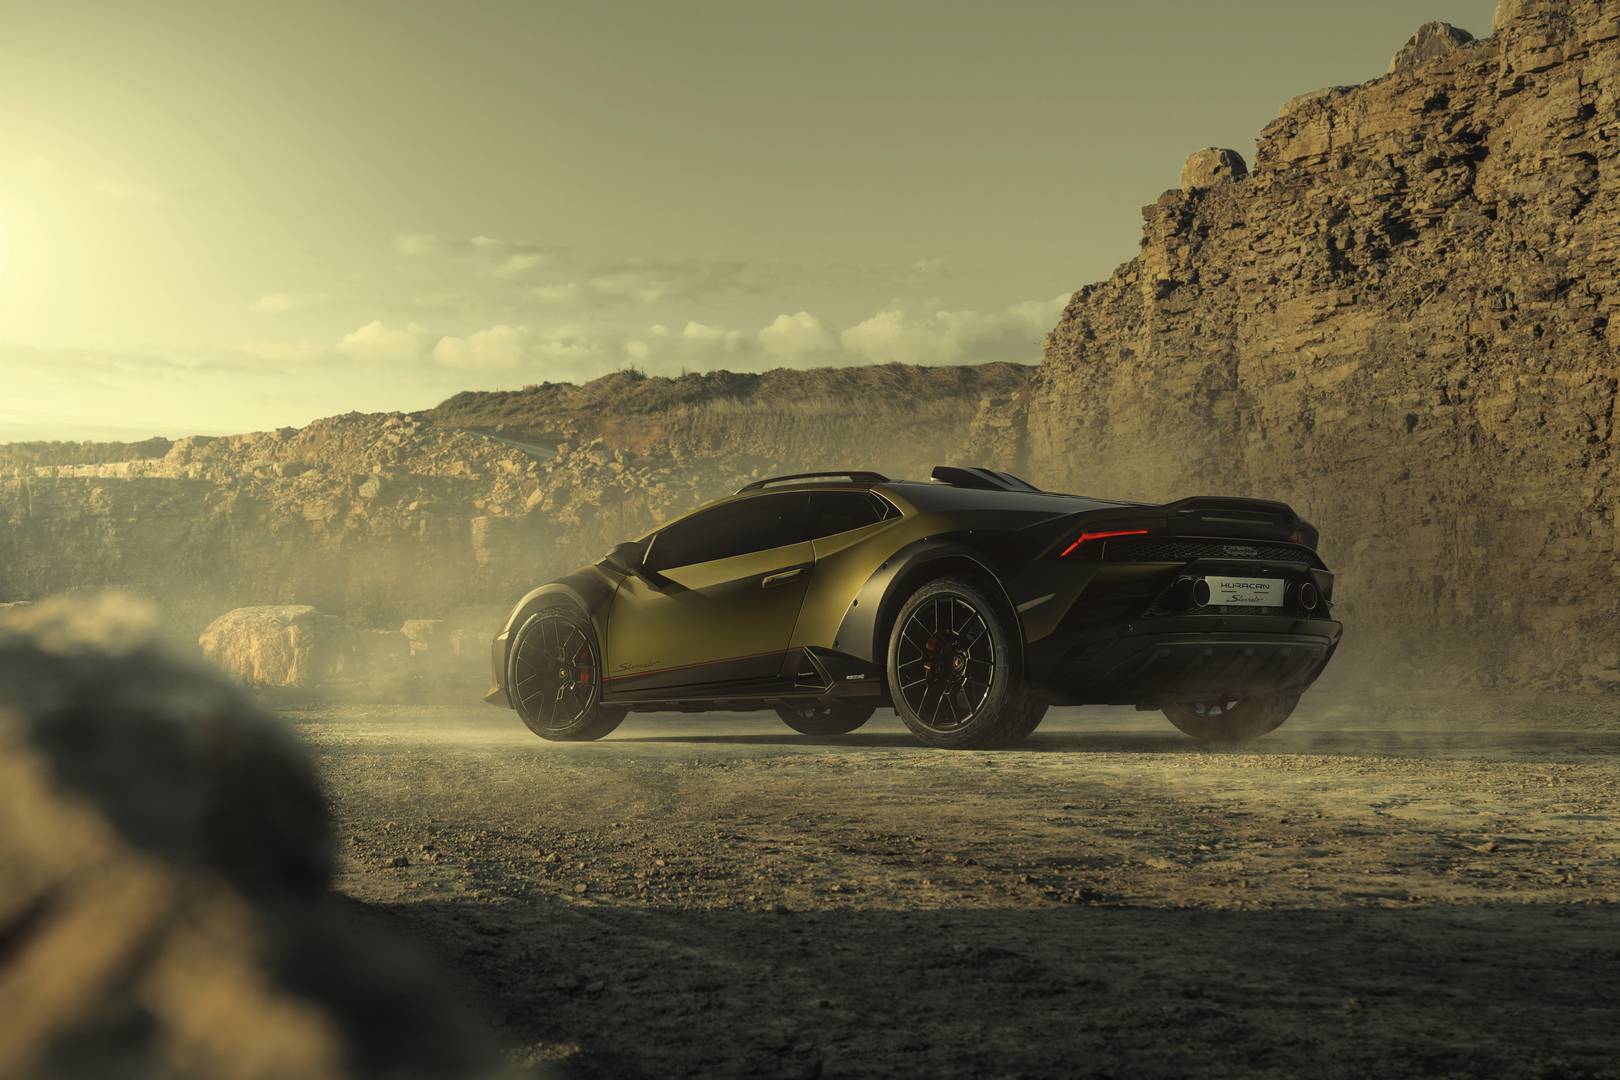 The 2023 Lamborghini Huracan Sterrato joins the off road supercar trend